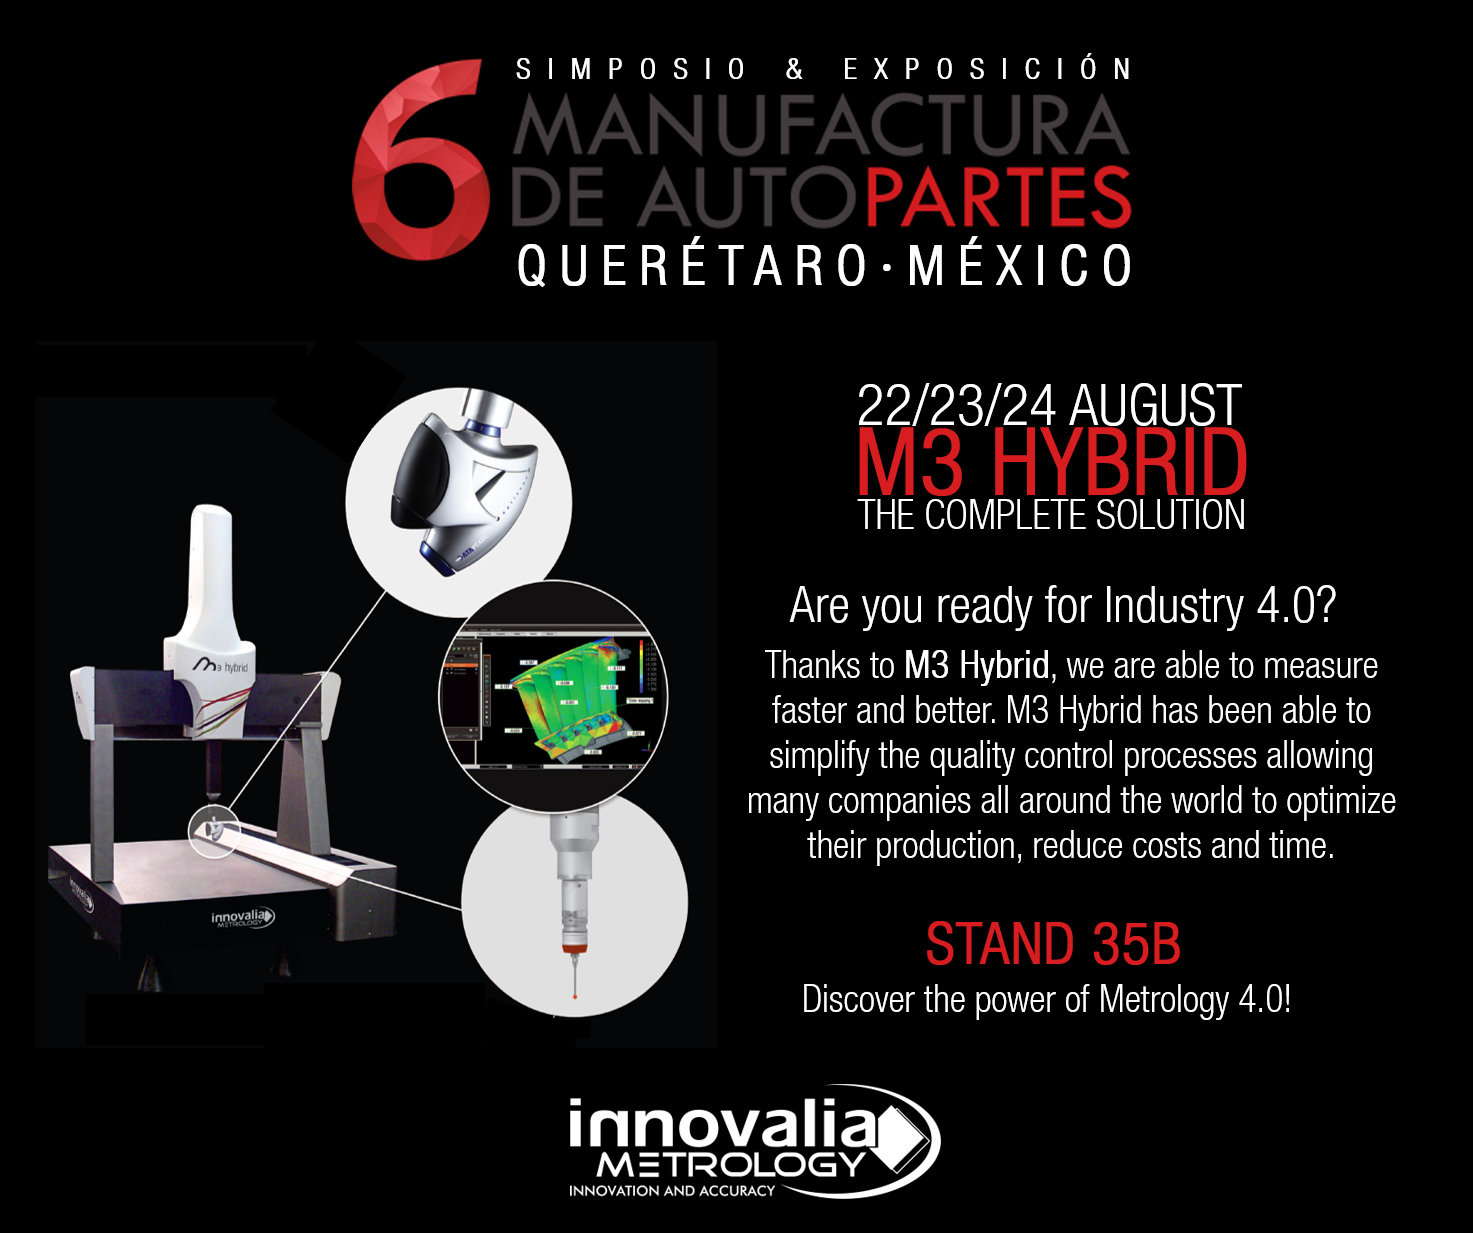 Innovalia Metrology presents M3 Hybrid in Mexico